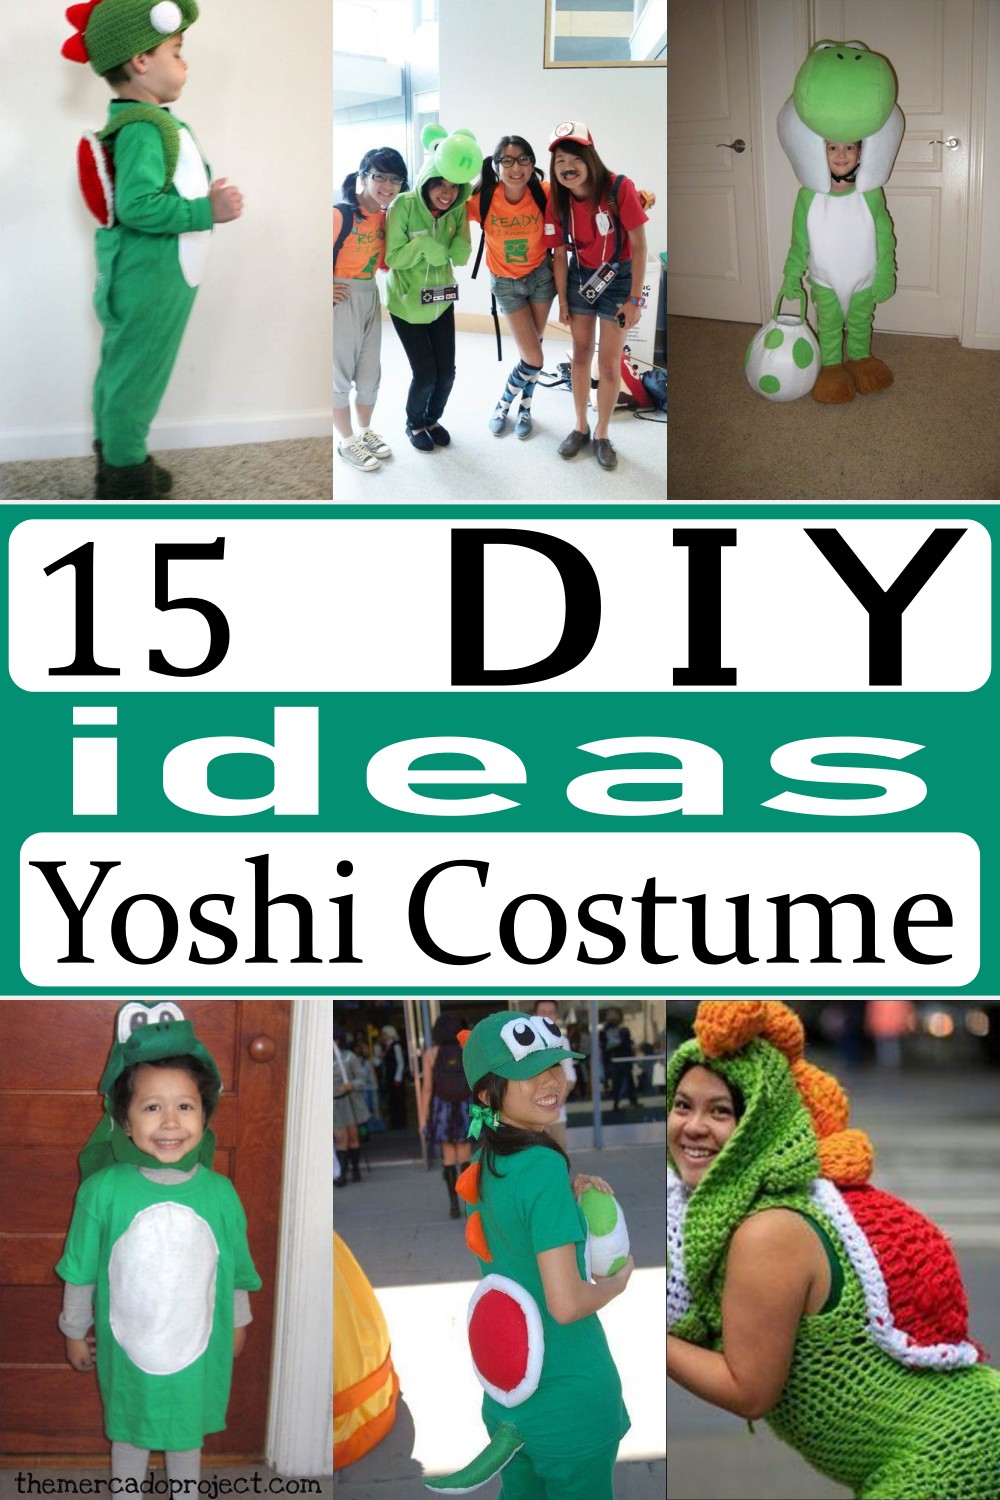 Yoshi Costume